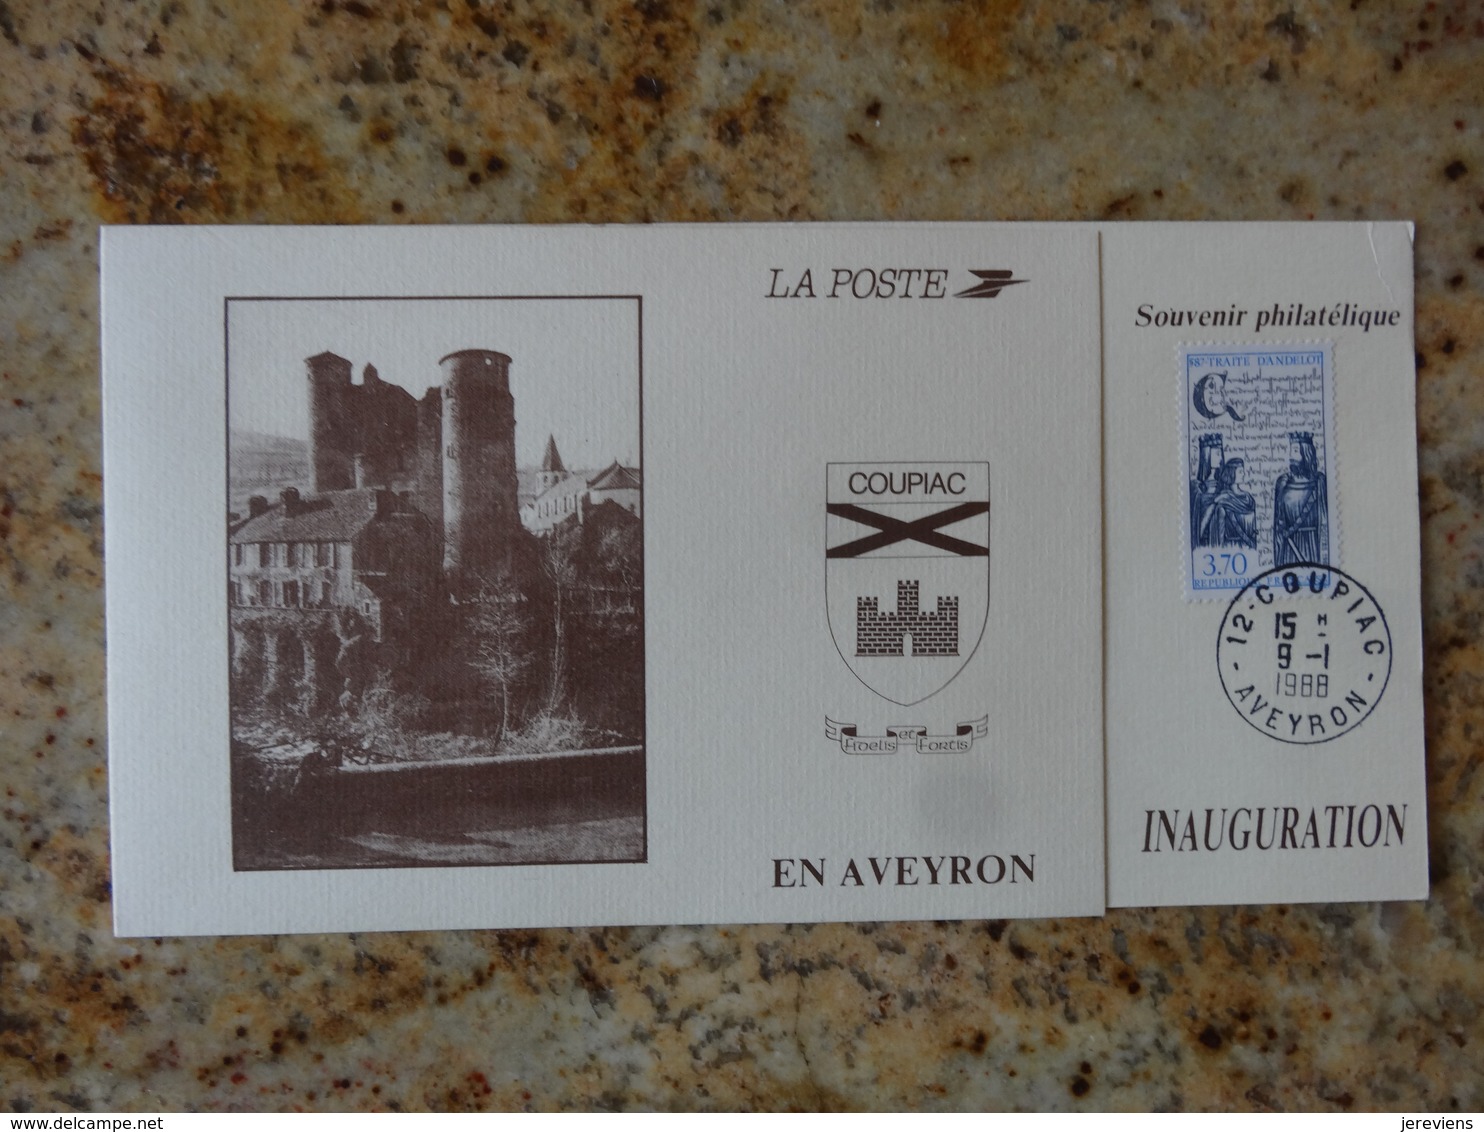 Coupiac Aveyron Inauguration Du Bureau De Poste 1988 - Documents De La Poste